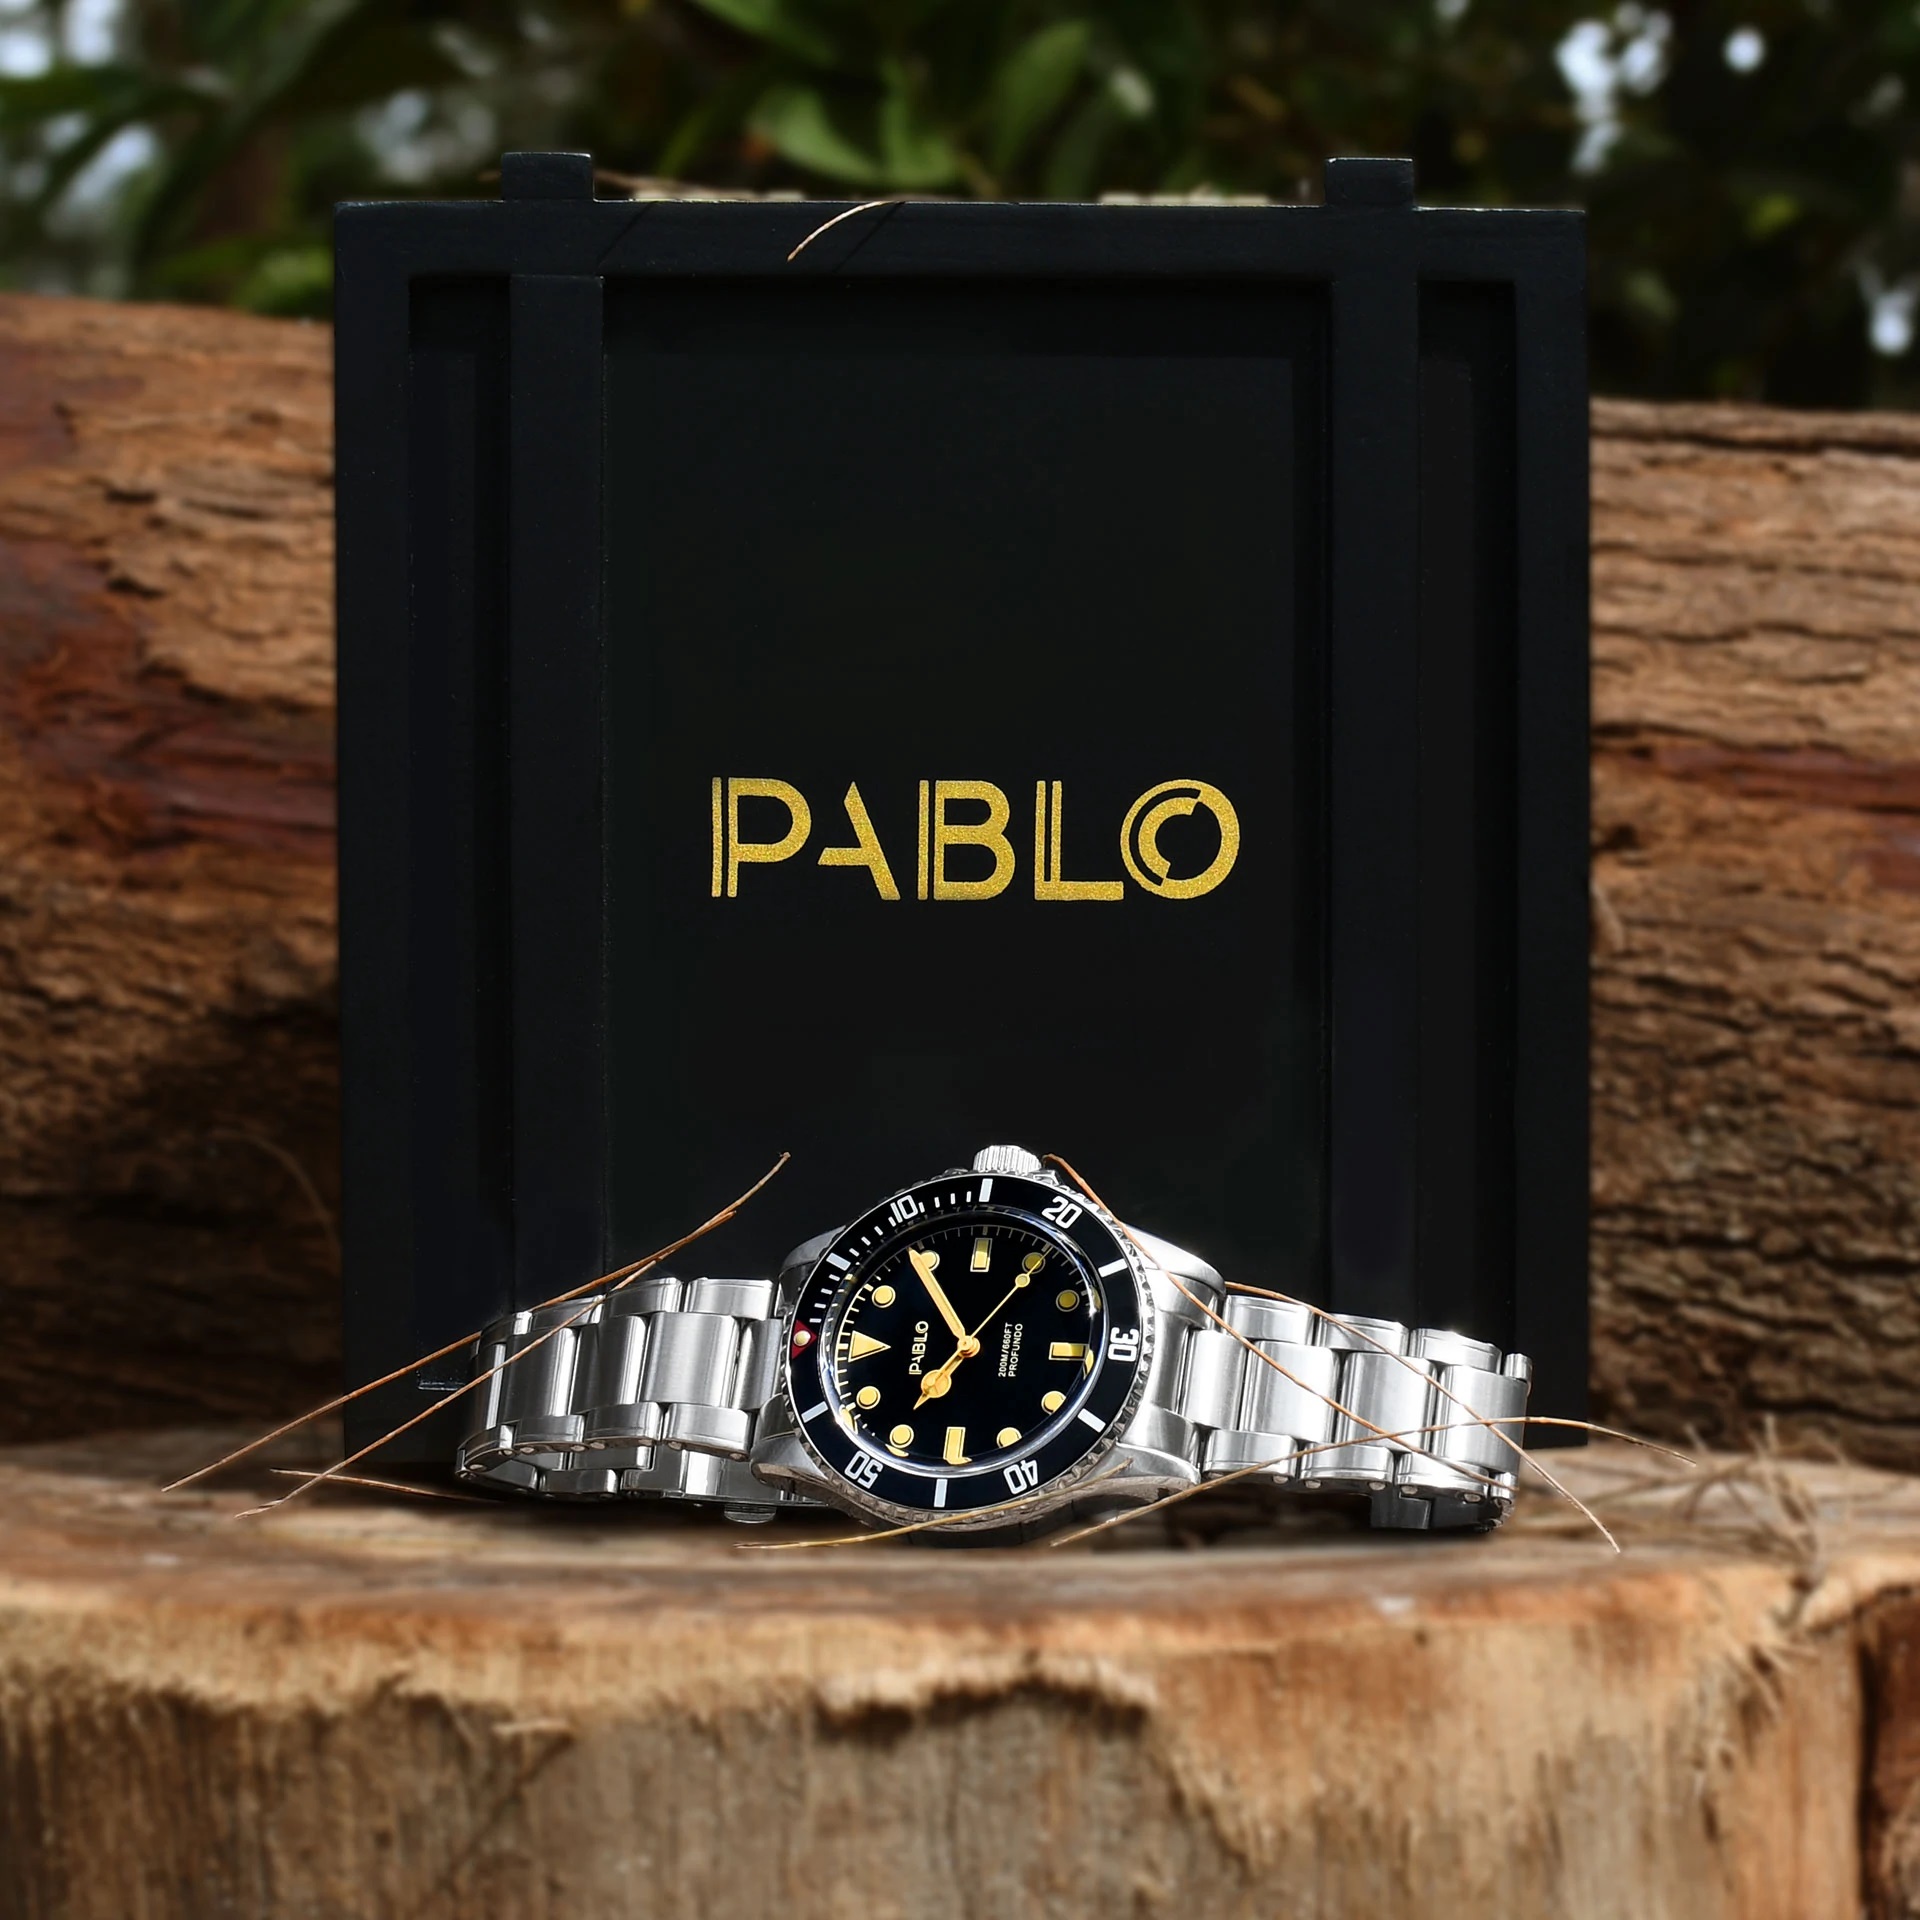 Pablo Profundo Automatic Men's Watch Black Dial / Black Bezel VB-1 Limited 200pcs